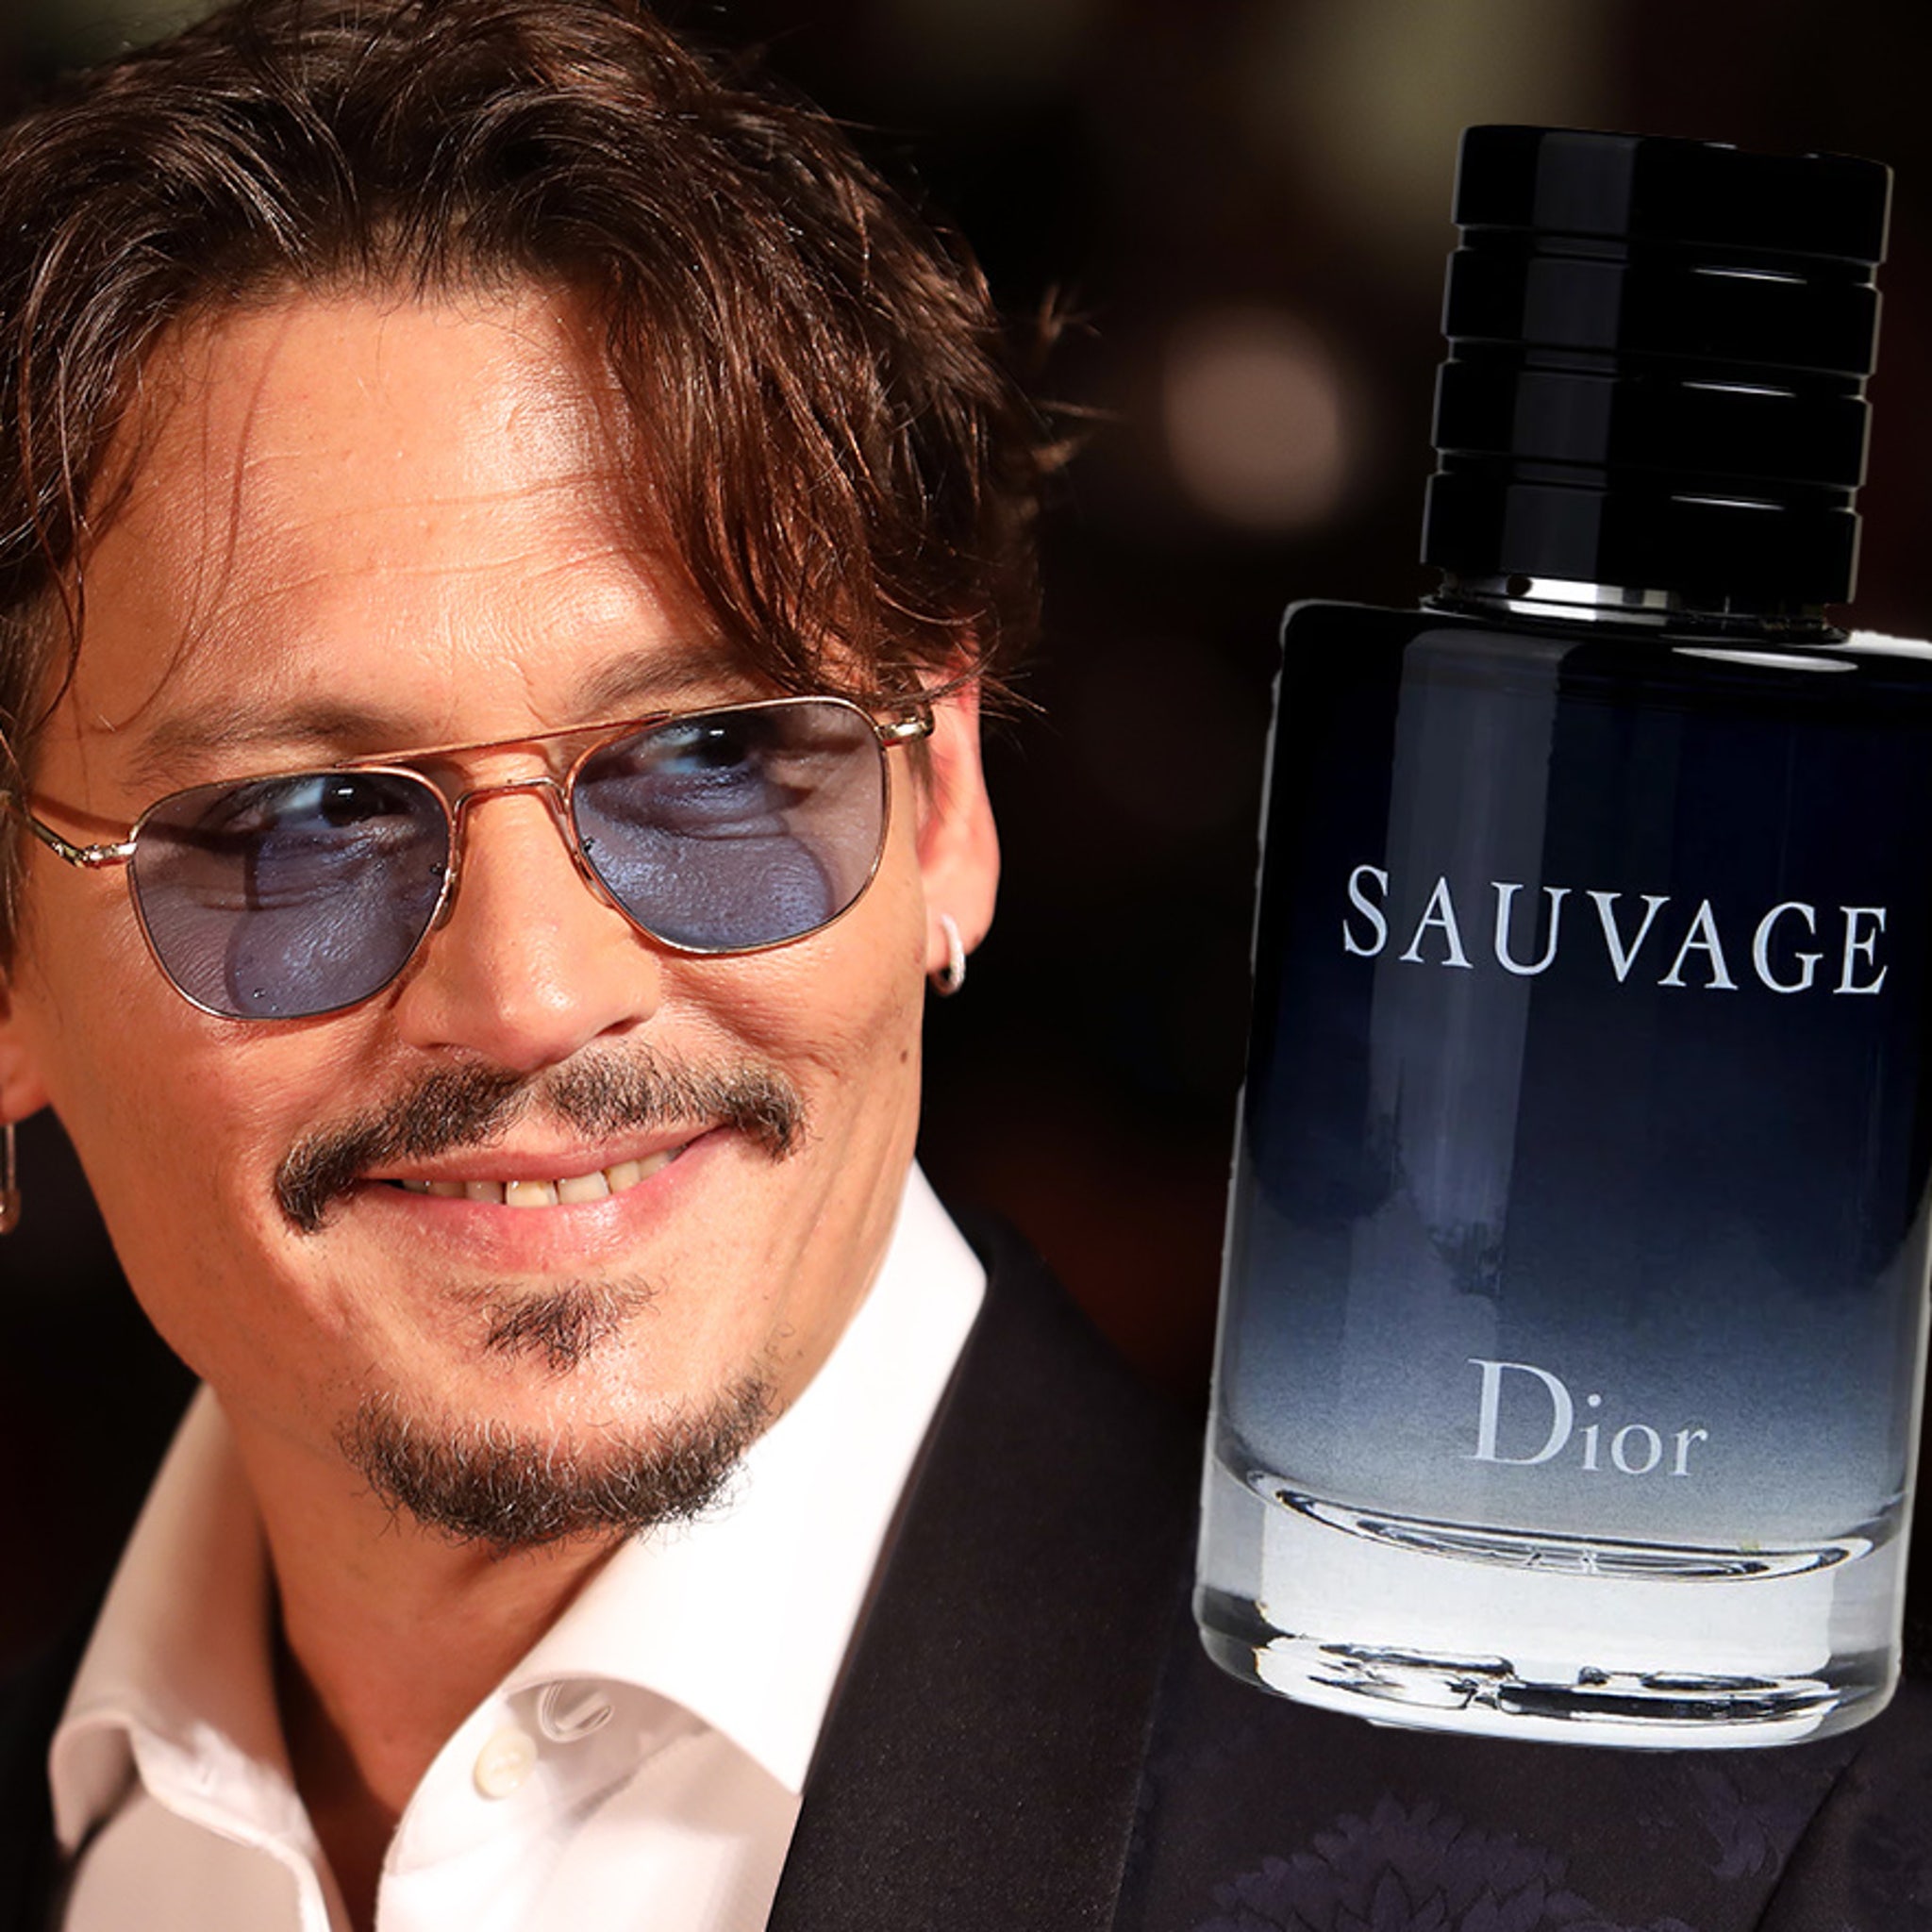 Dior Sauvage perfume ad campaign criticized for use of Native American  culture